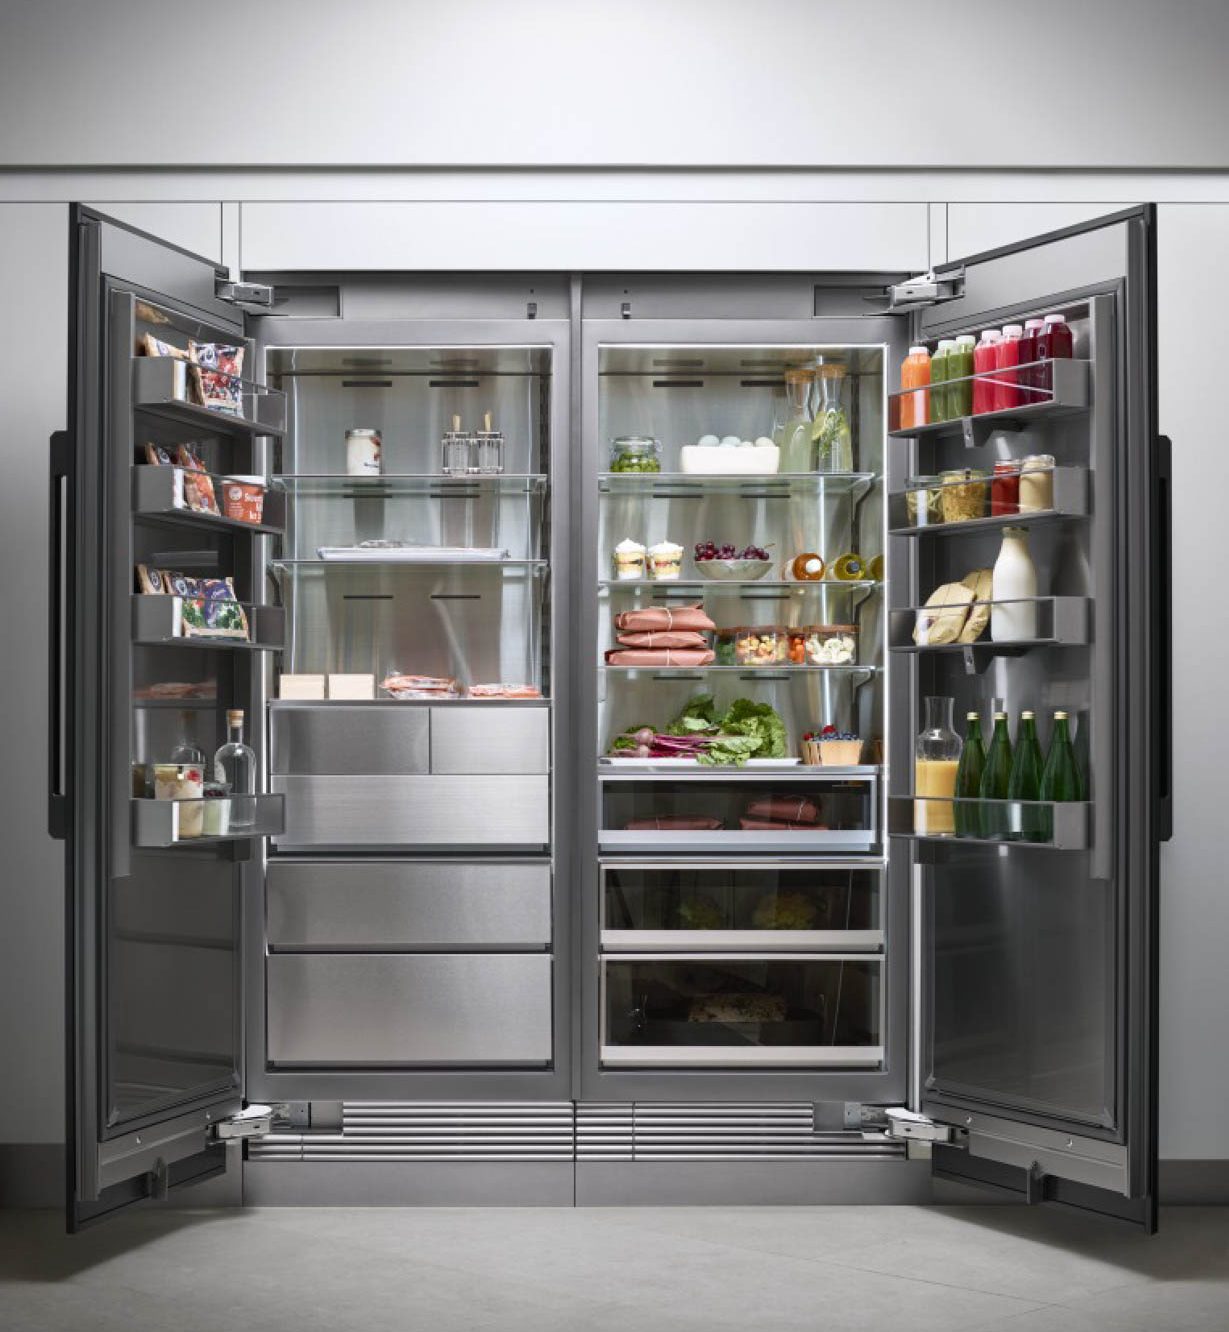 Gorenje side by side. Двухстворчатый холодильник Miele. Холодильник Samsung rs66n8100s9. Американский холодильник. Большой холодильник.